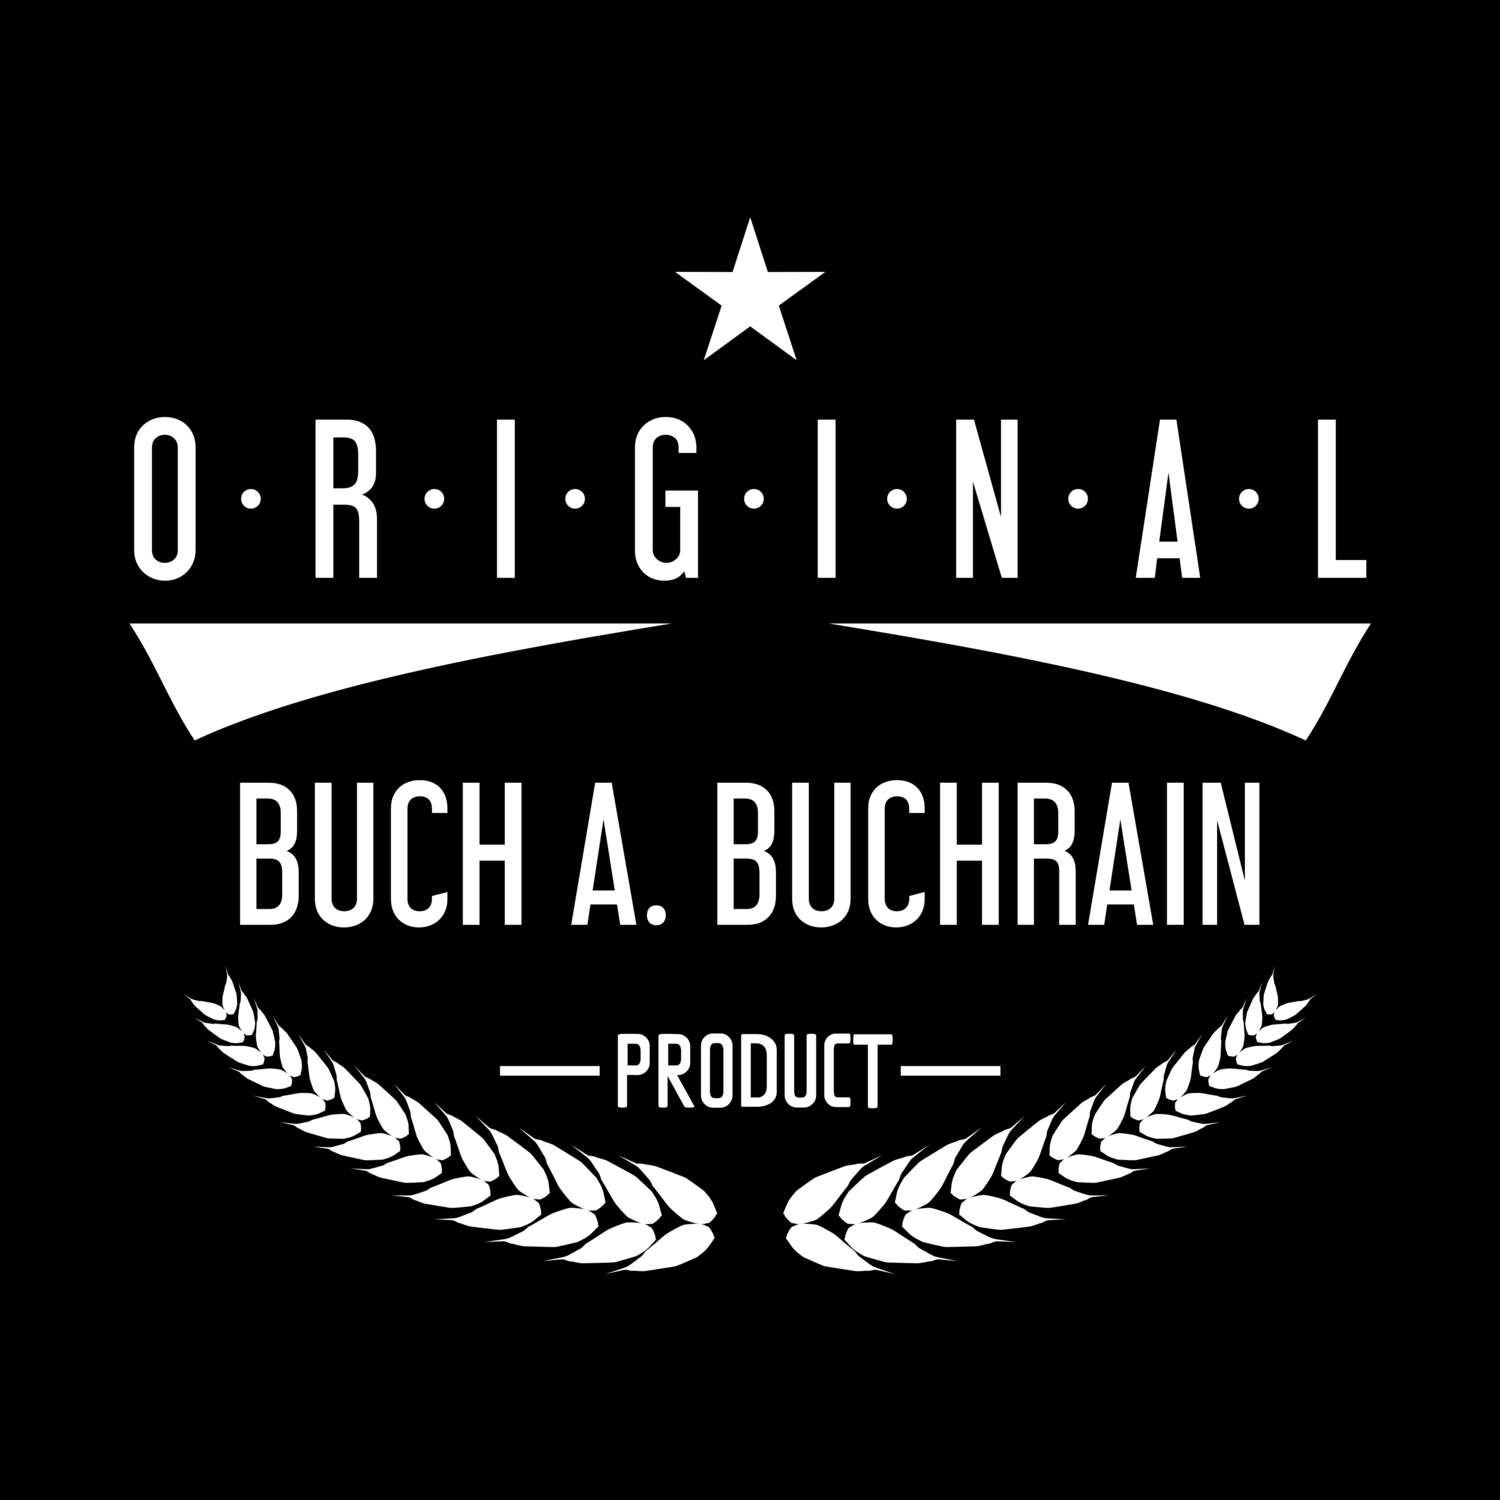 Buch a. Buchrain T-Shirt »Original Product«